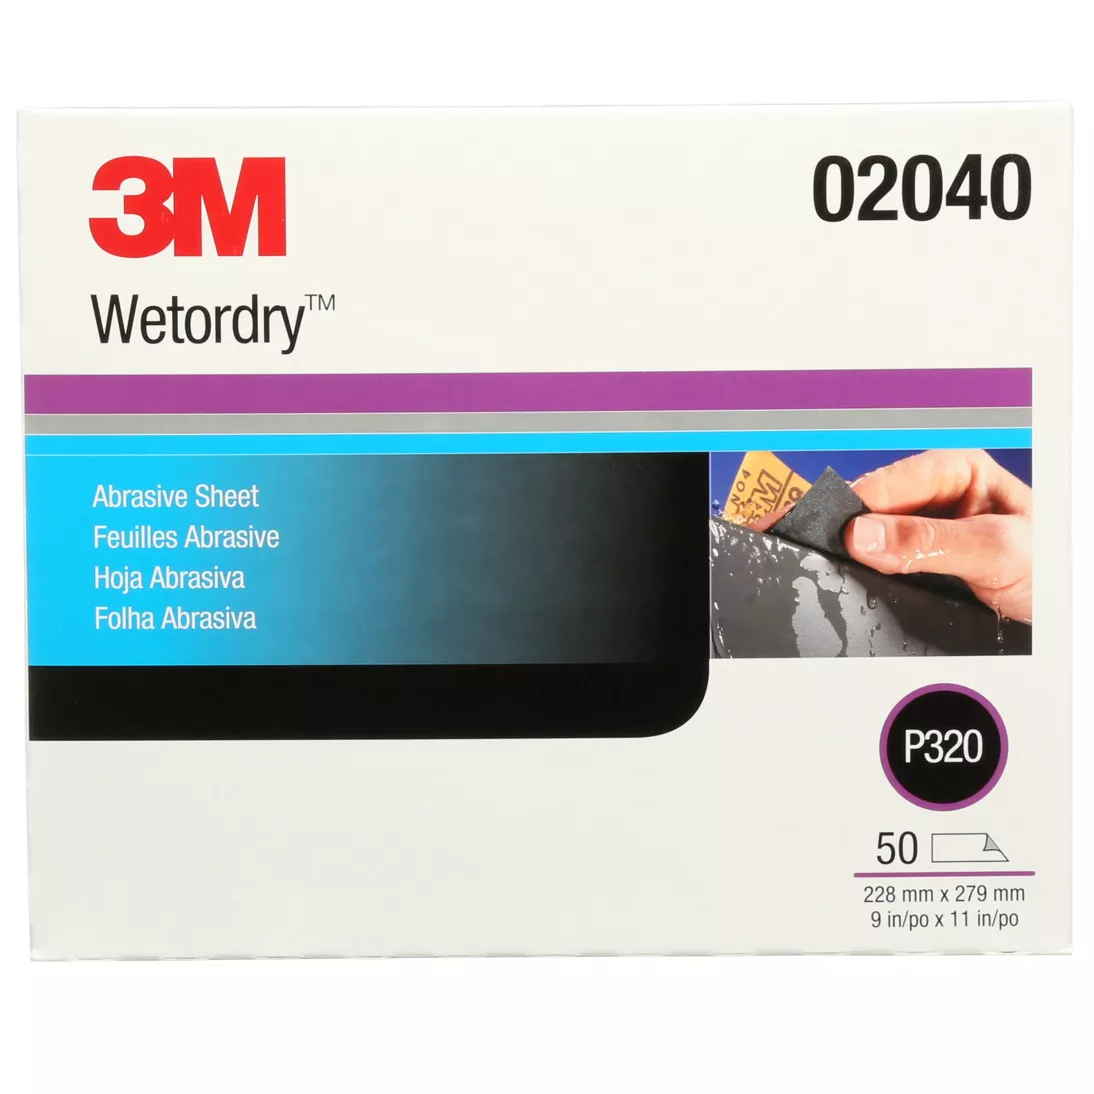 3M™ Wetordry™ Abrasive Sheet 213Q, 02040, P320, 9 in x 11 in, 50 sheets
per carton, 5 cartons per case